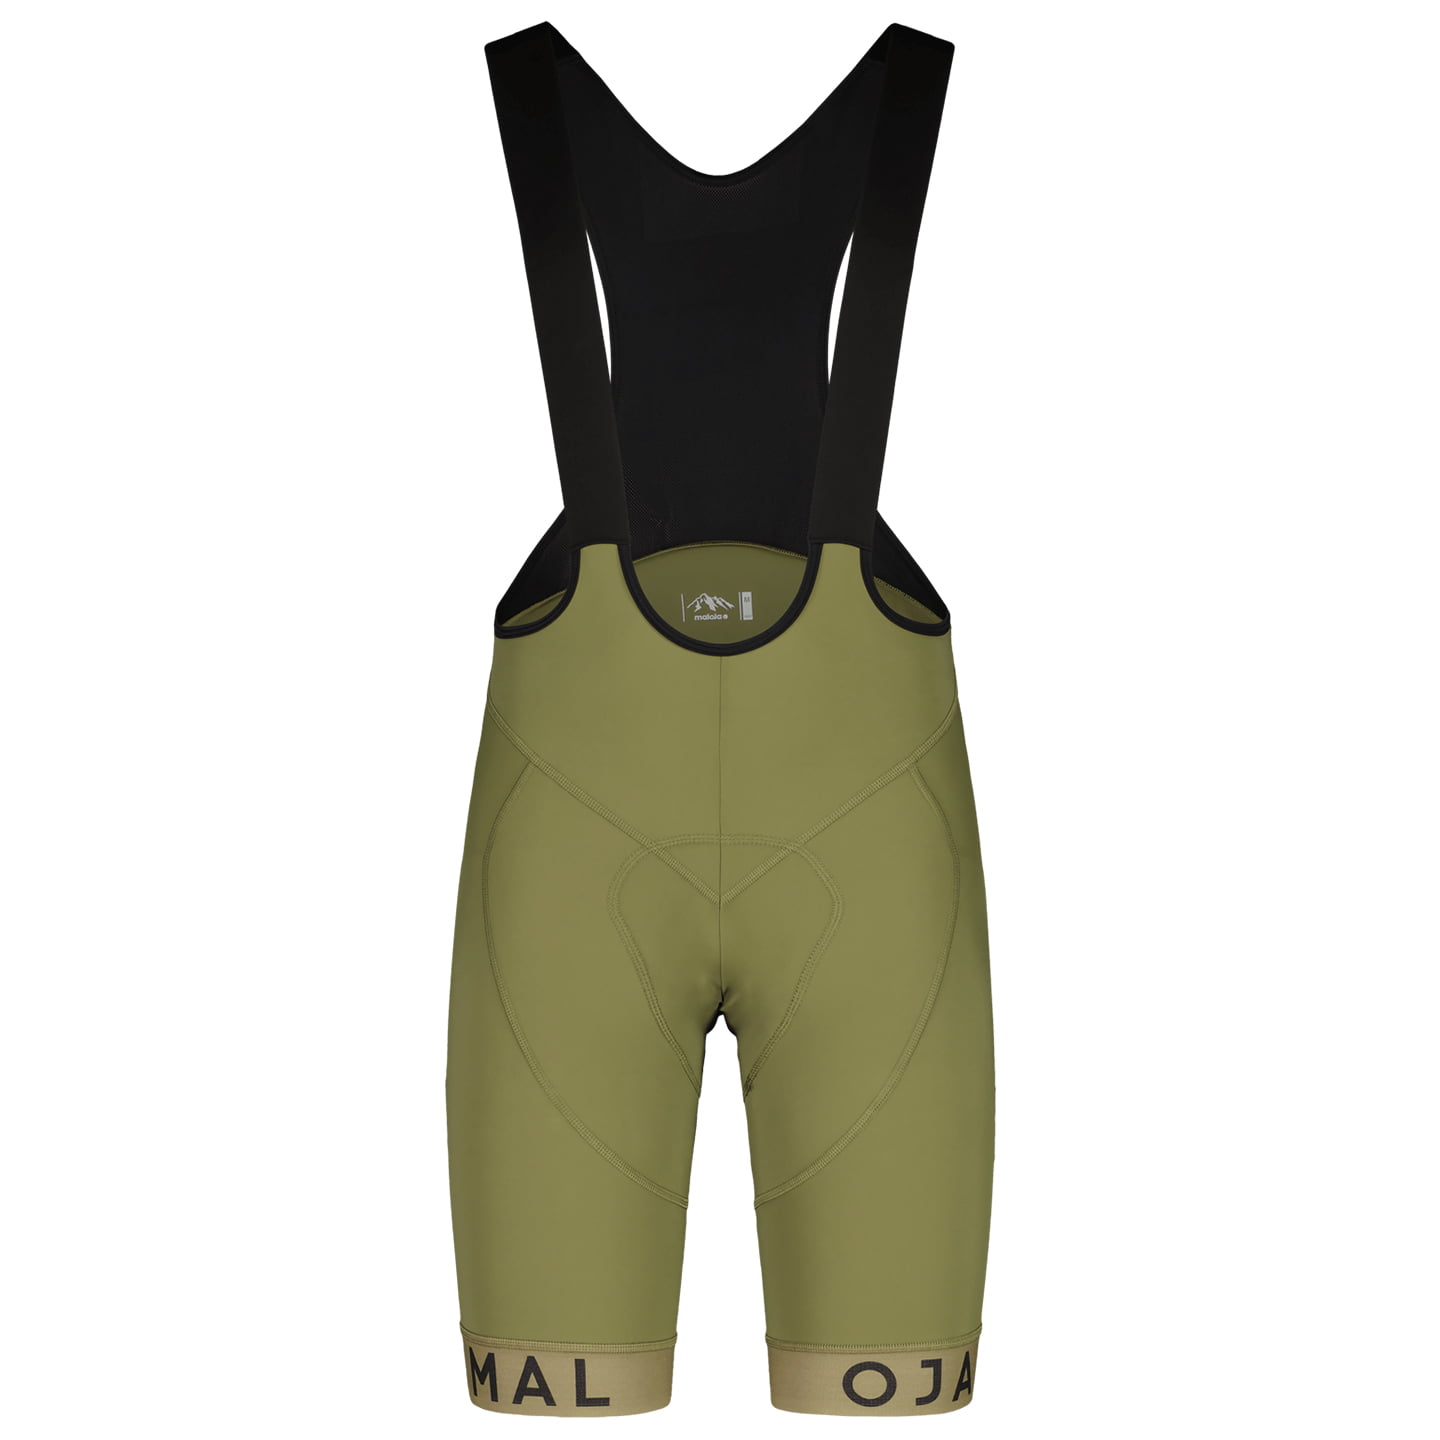 MALOJA TelvetM. Bib Shorts Bib Shorts, for men, size S, Cycle trousers, Cycle clothing